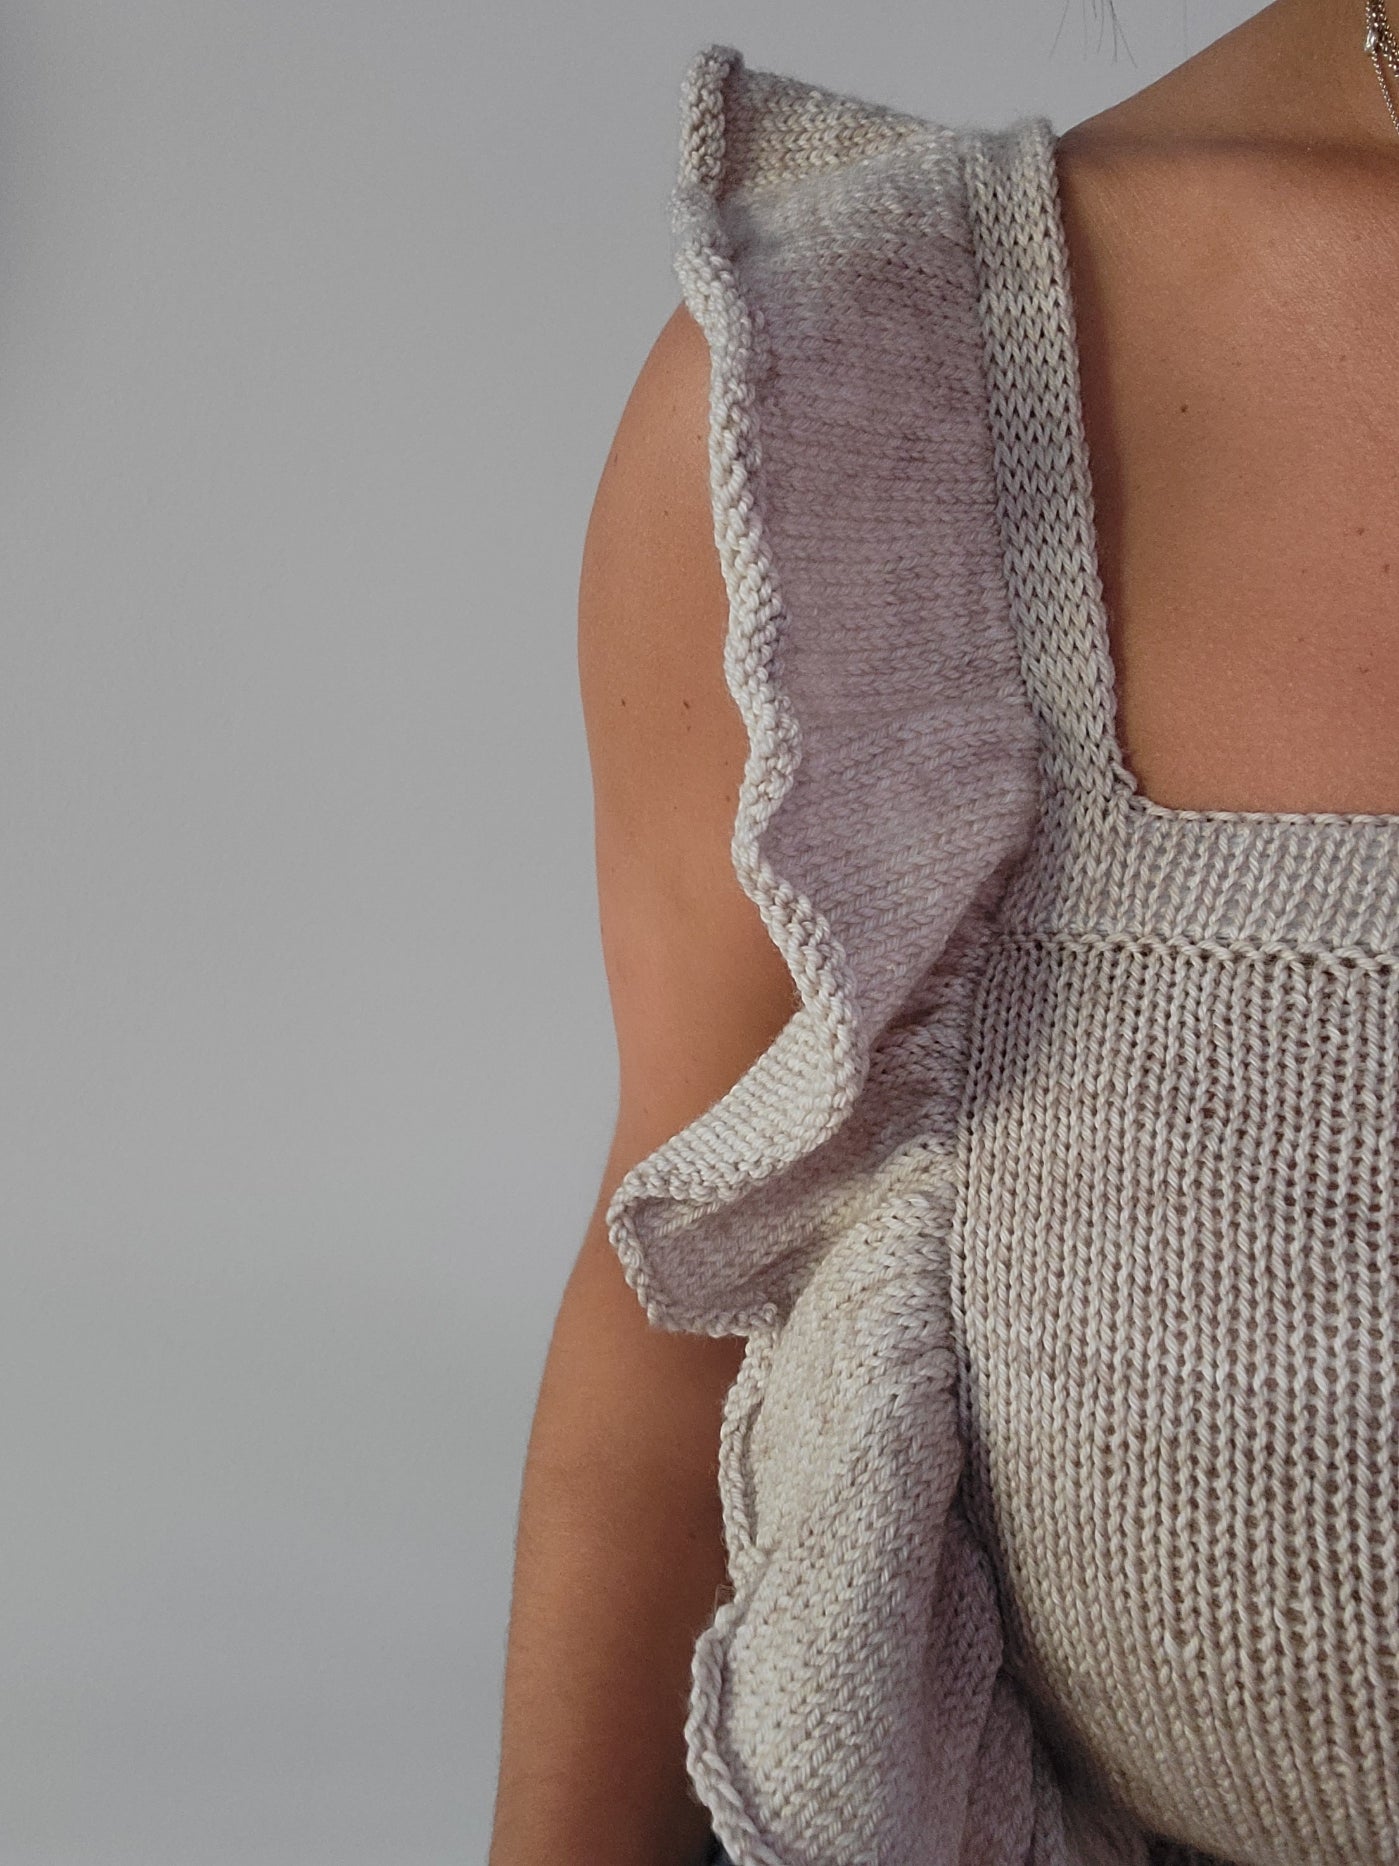 Seabreeze Top - Knitting Pattern